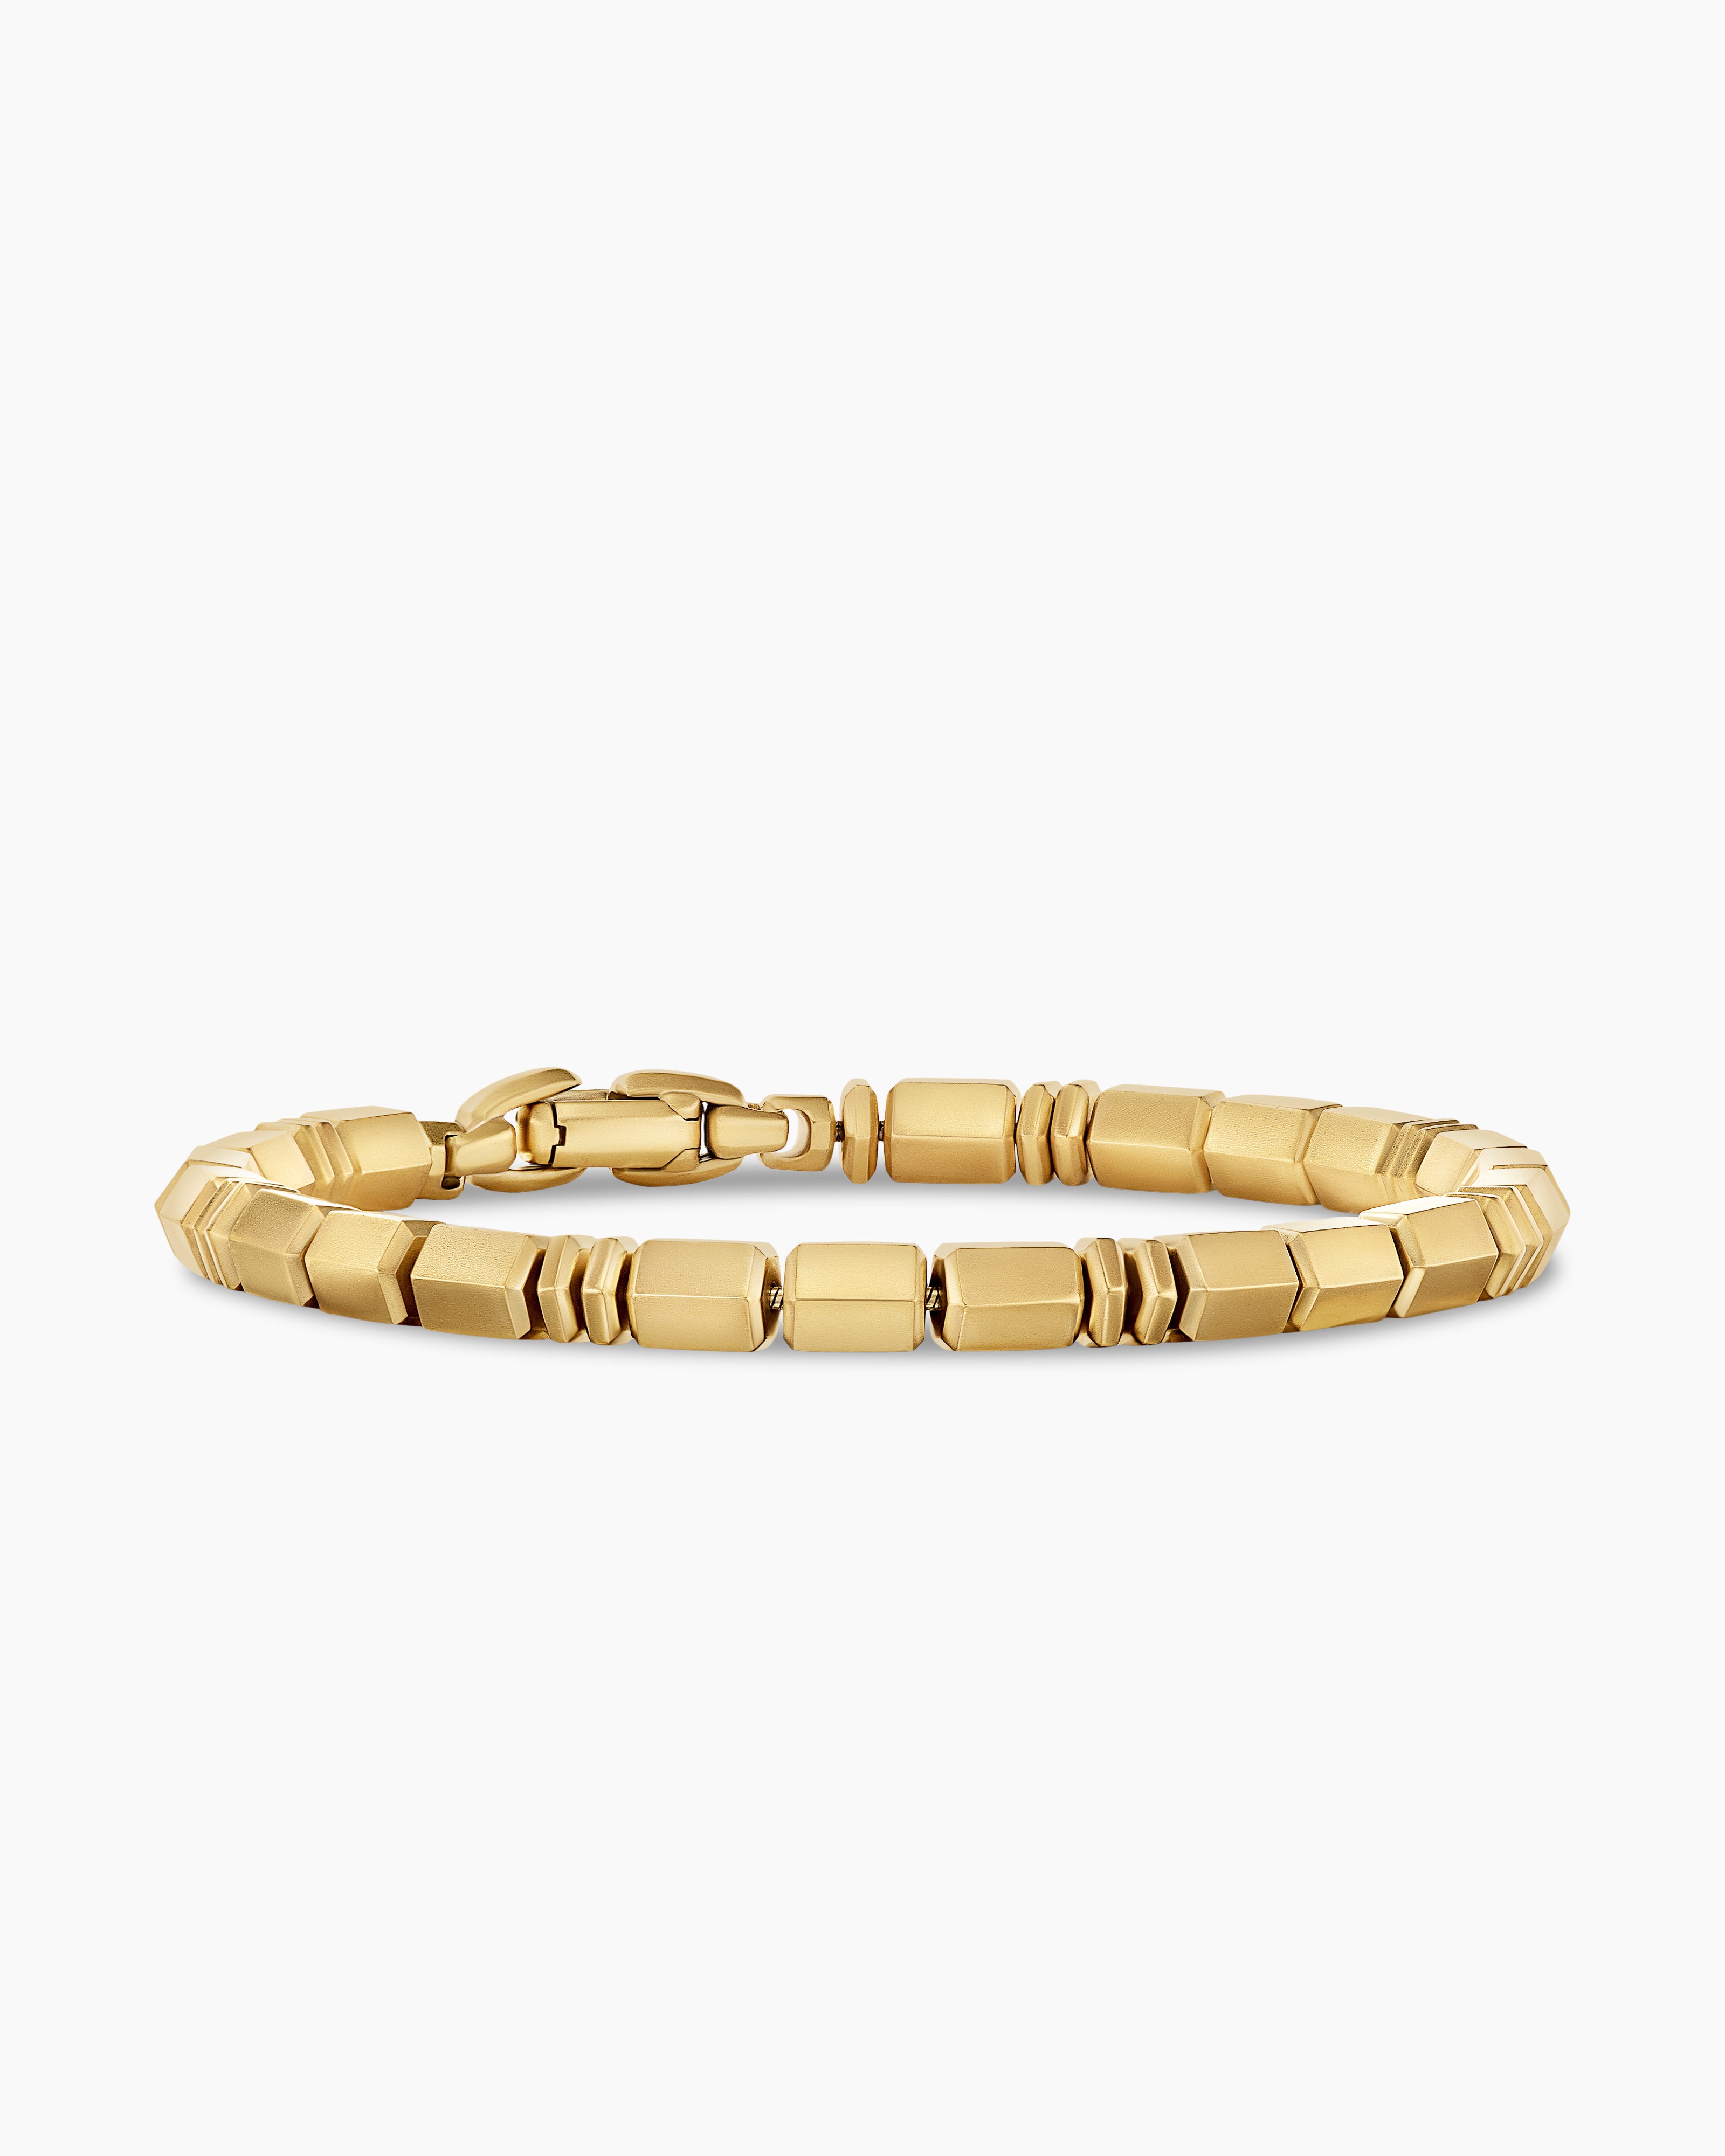 David Yurman Spiritual Beads Bracelet in 18K Yellow Gold, 6mm Men's Size Small